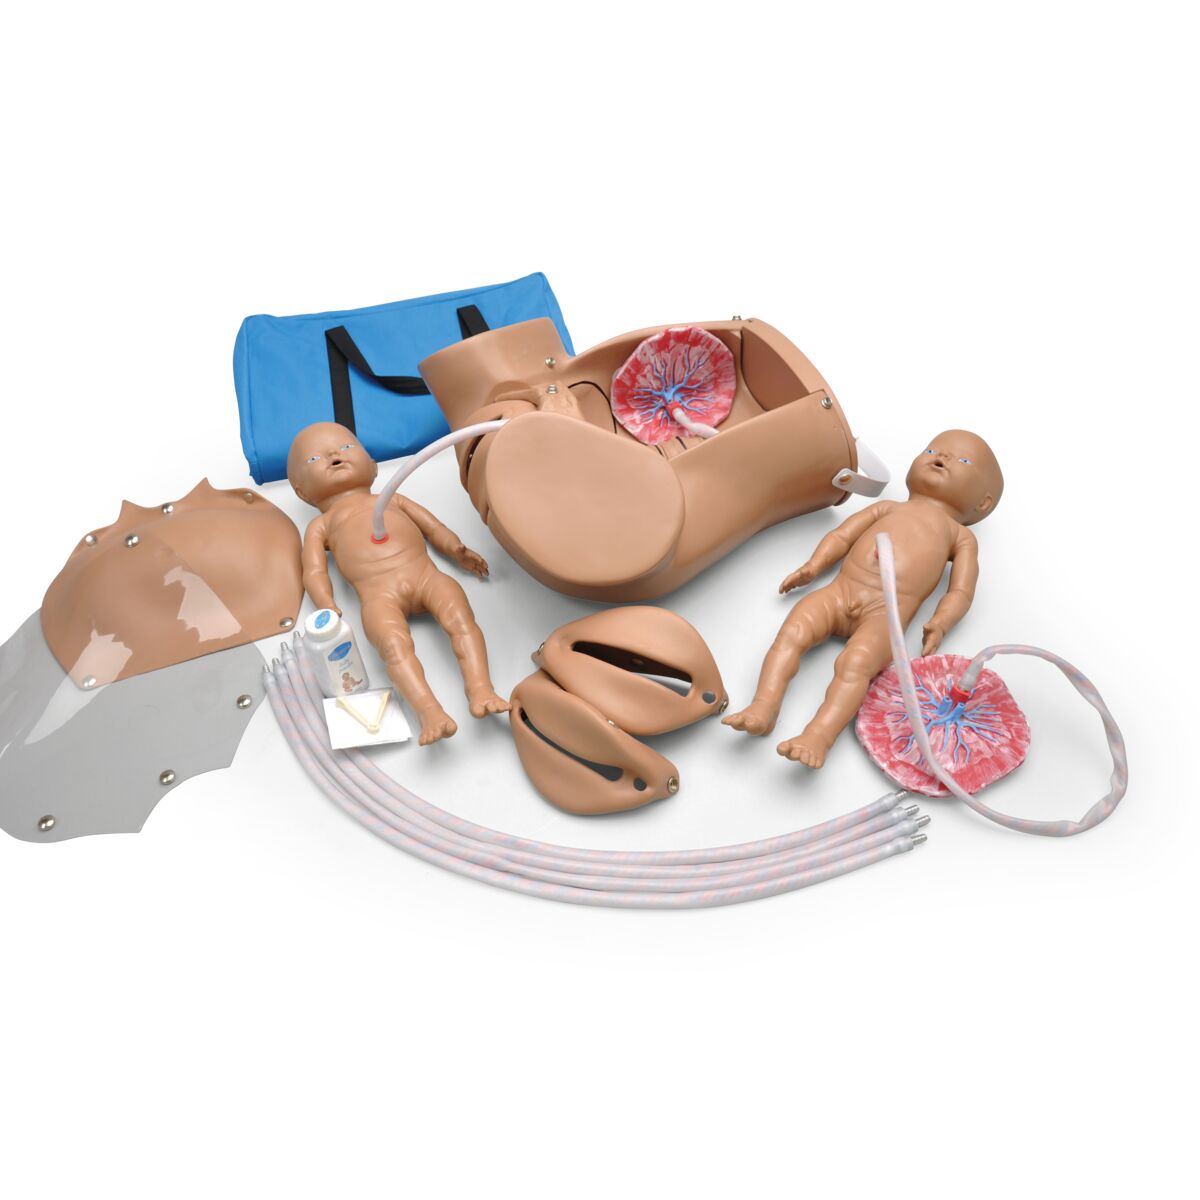 Birthing Simulator & Stages Set - 8000888 - 3011953 - Simulation Kits - 3B  Scientific